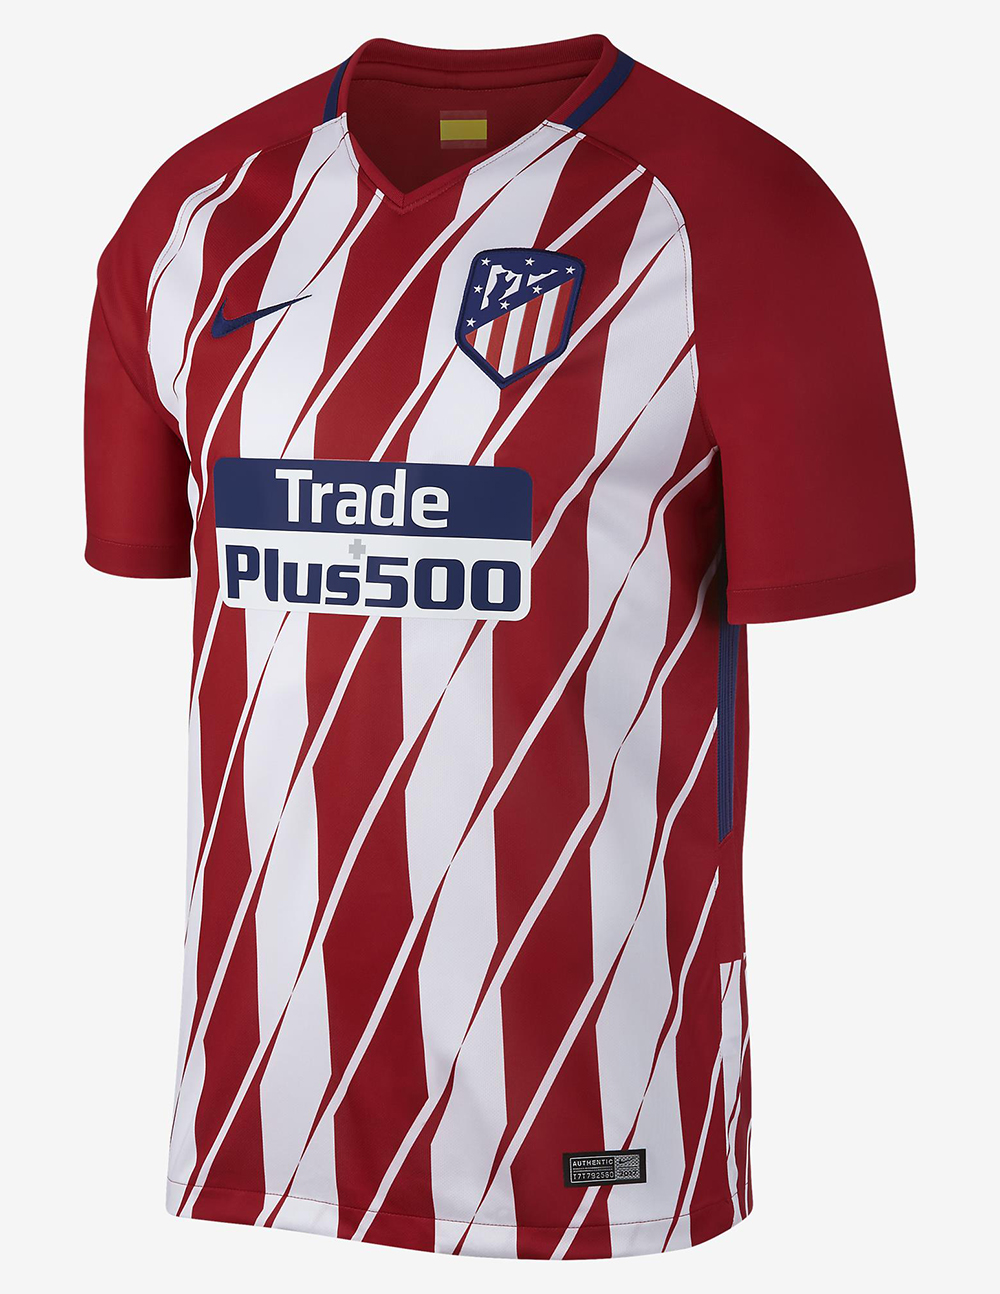 Camiseta titular Nike del Atlético Madrid 2017 18